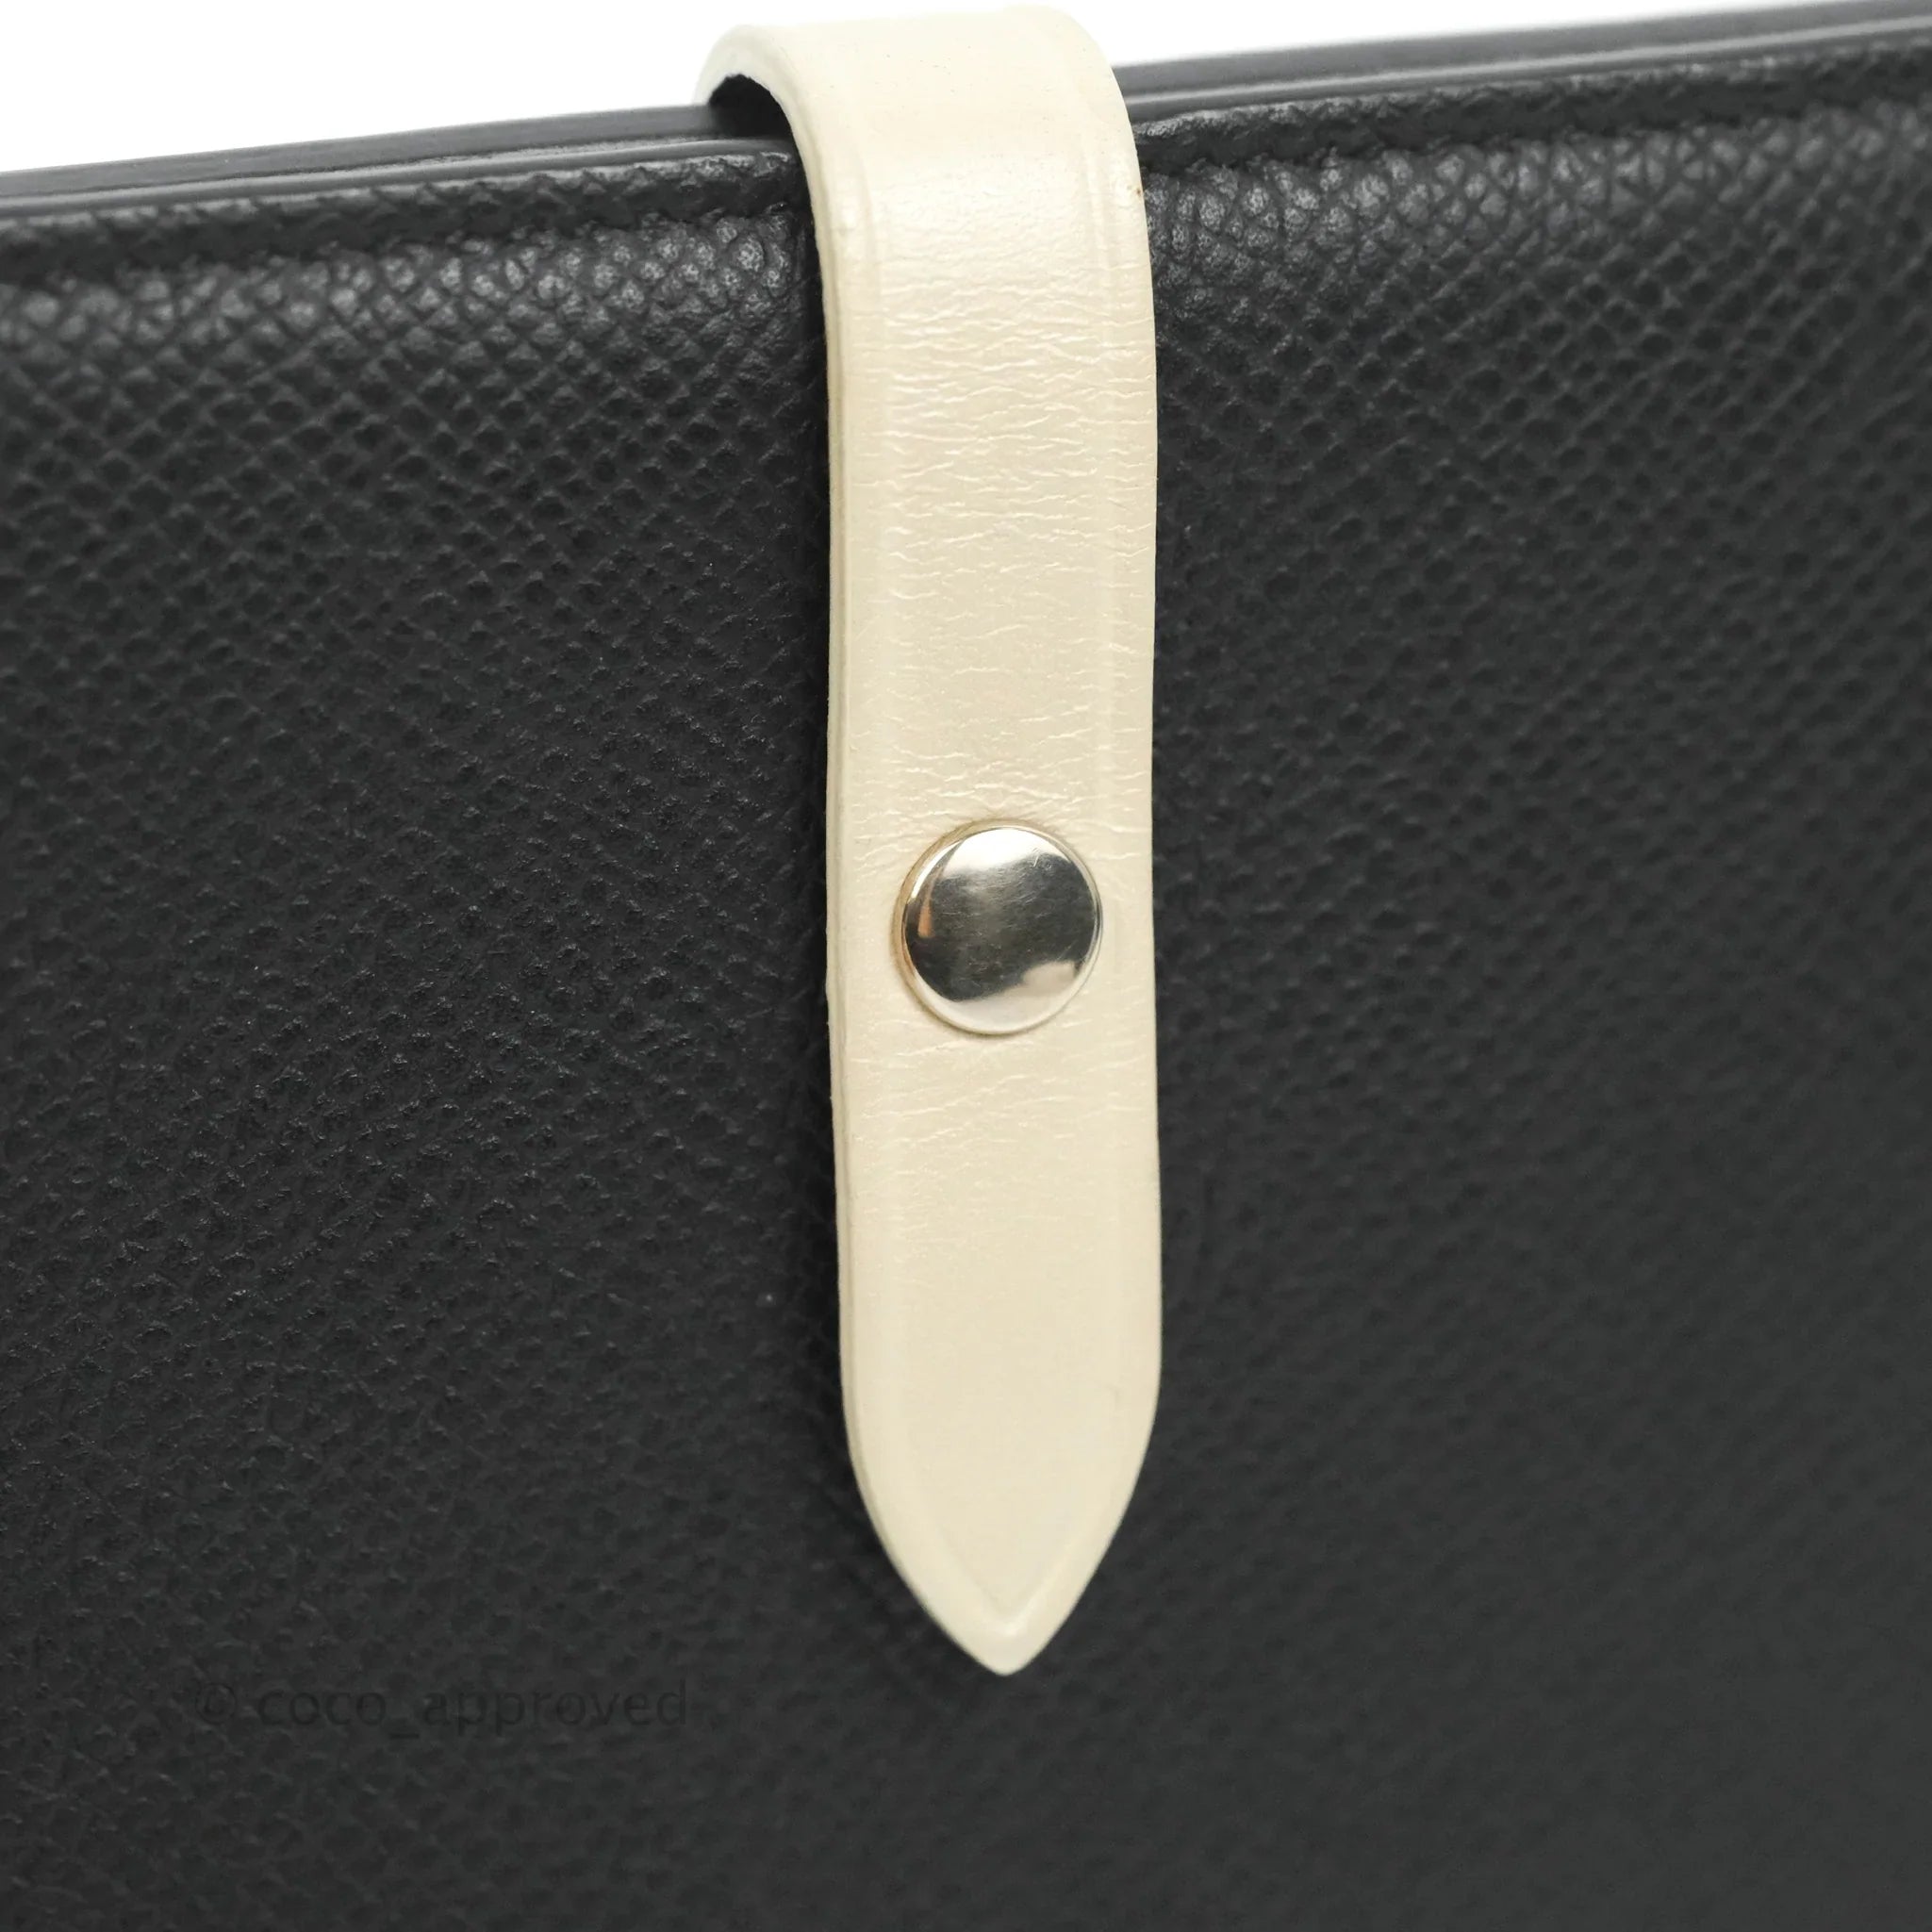 Celine Large Strap Grained Leather Wallet